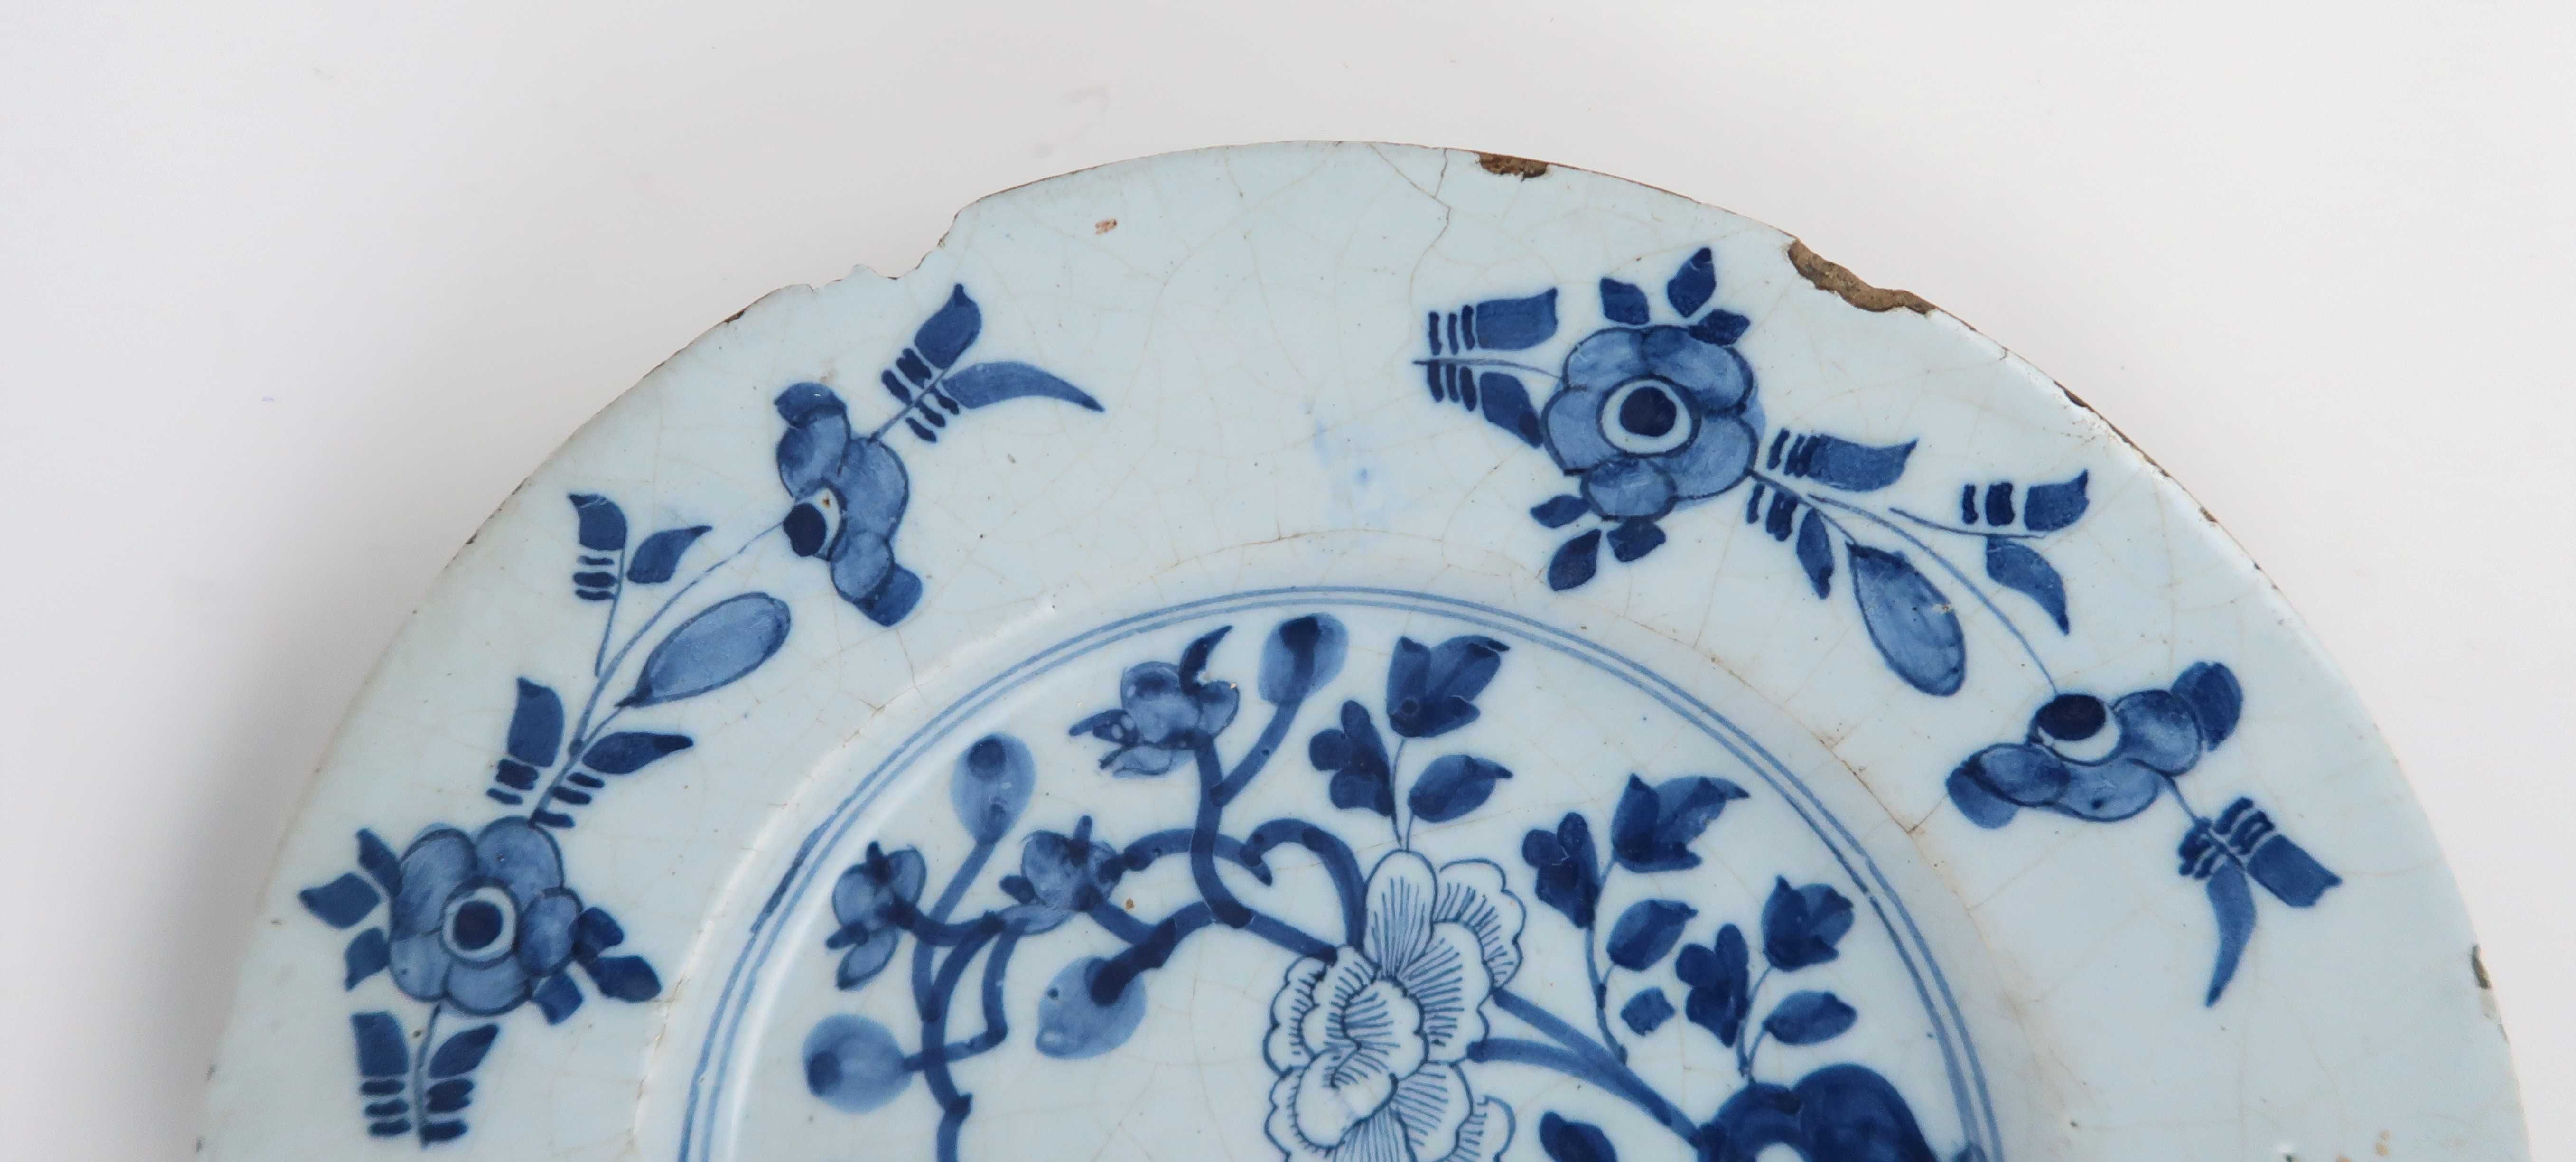 Prato Cerâmica azul e branca Séc. XVII / XVIII (Ref. 1)